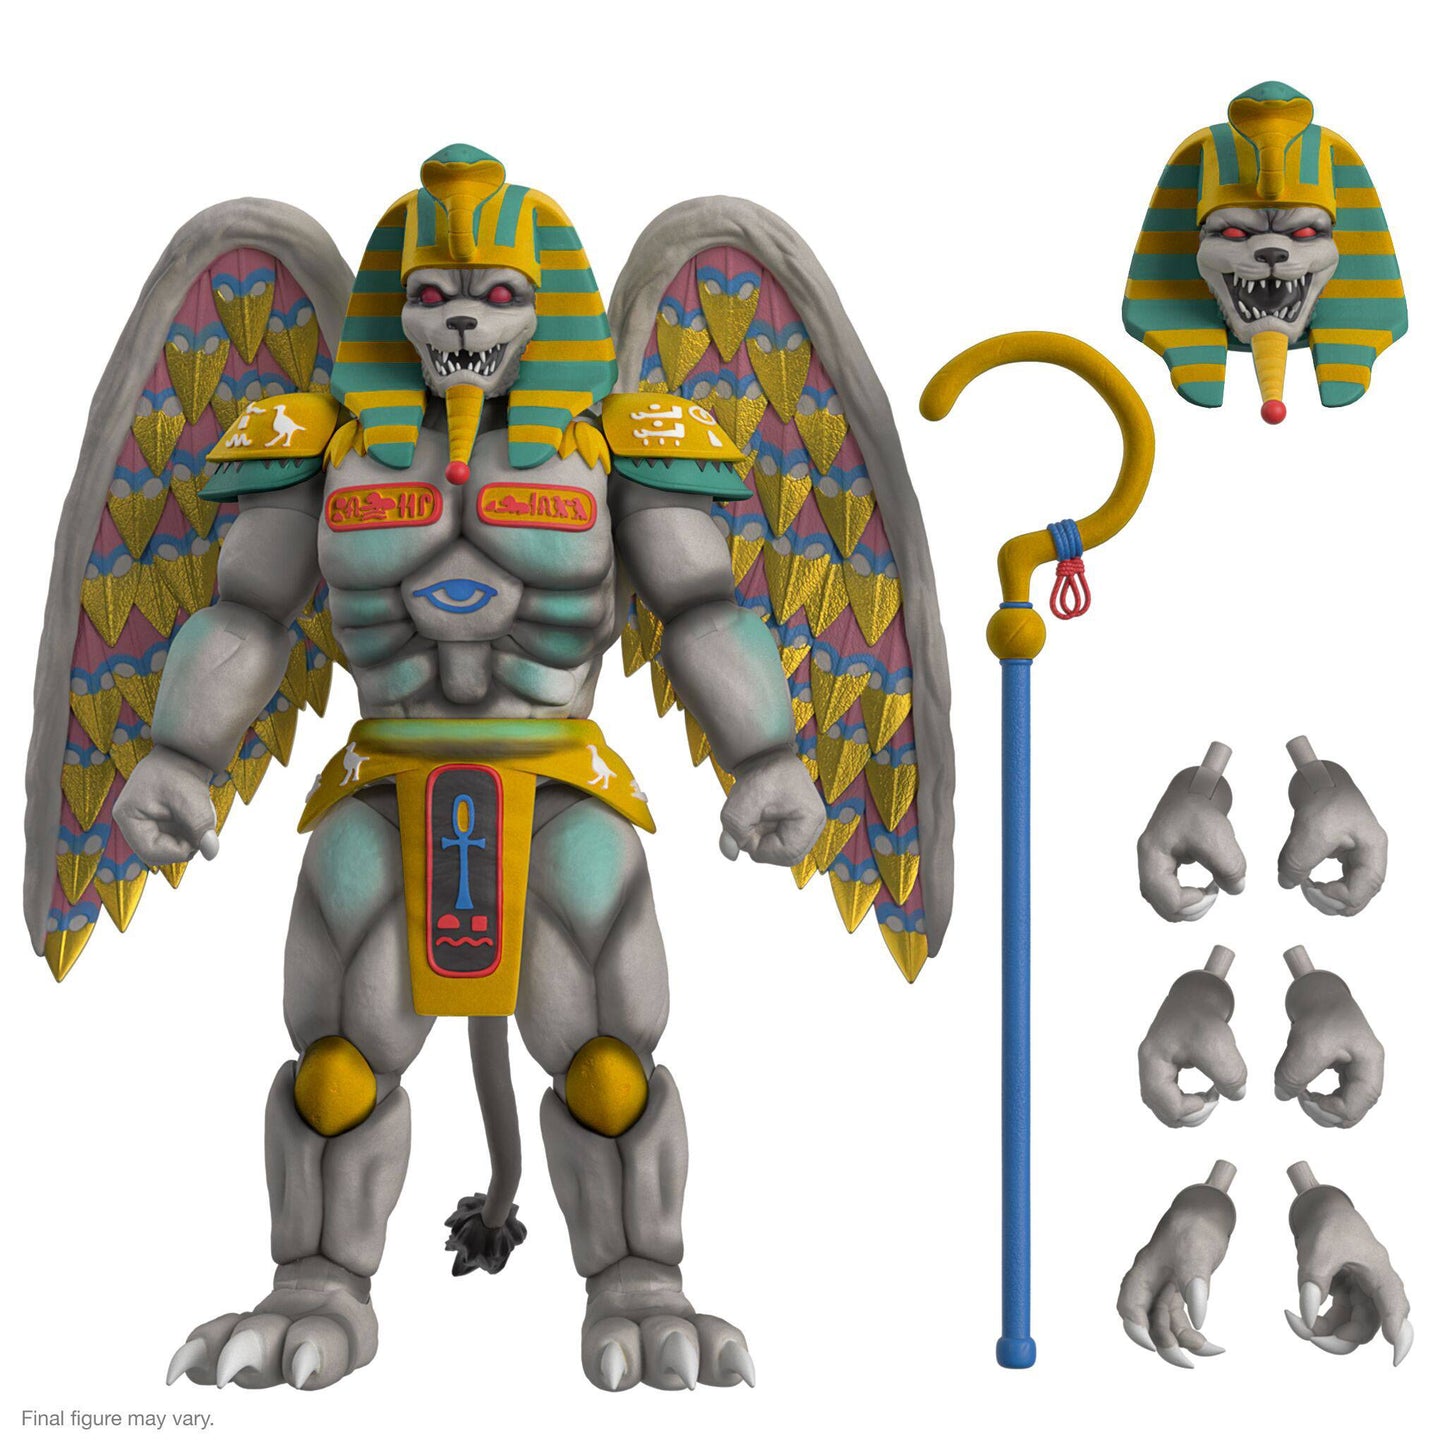 Super7 Mighty Morphin Power Rangers Ultimates Wave 2 - King Sphinx Figure